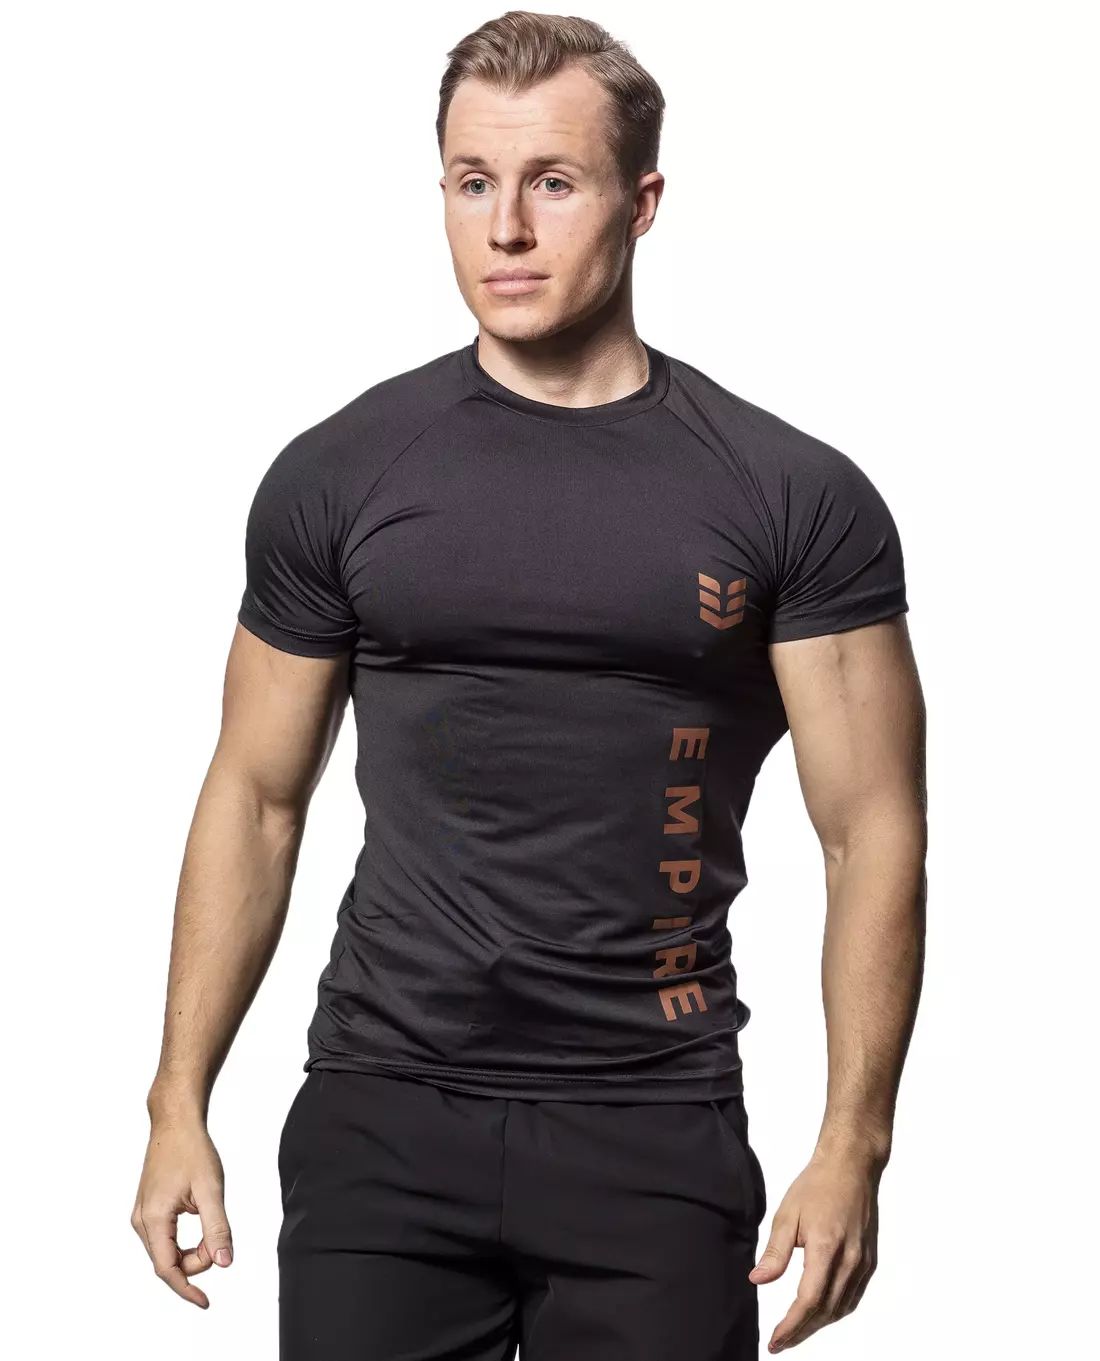 Adonis Training T-Shirt Black Empire Embodied